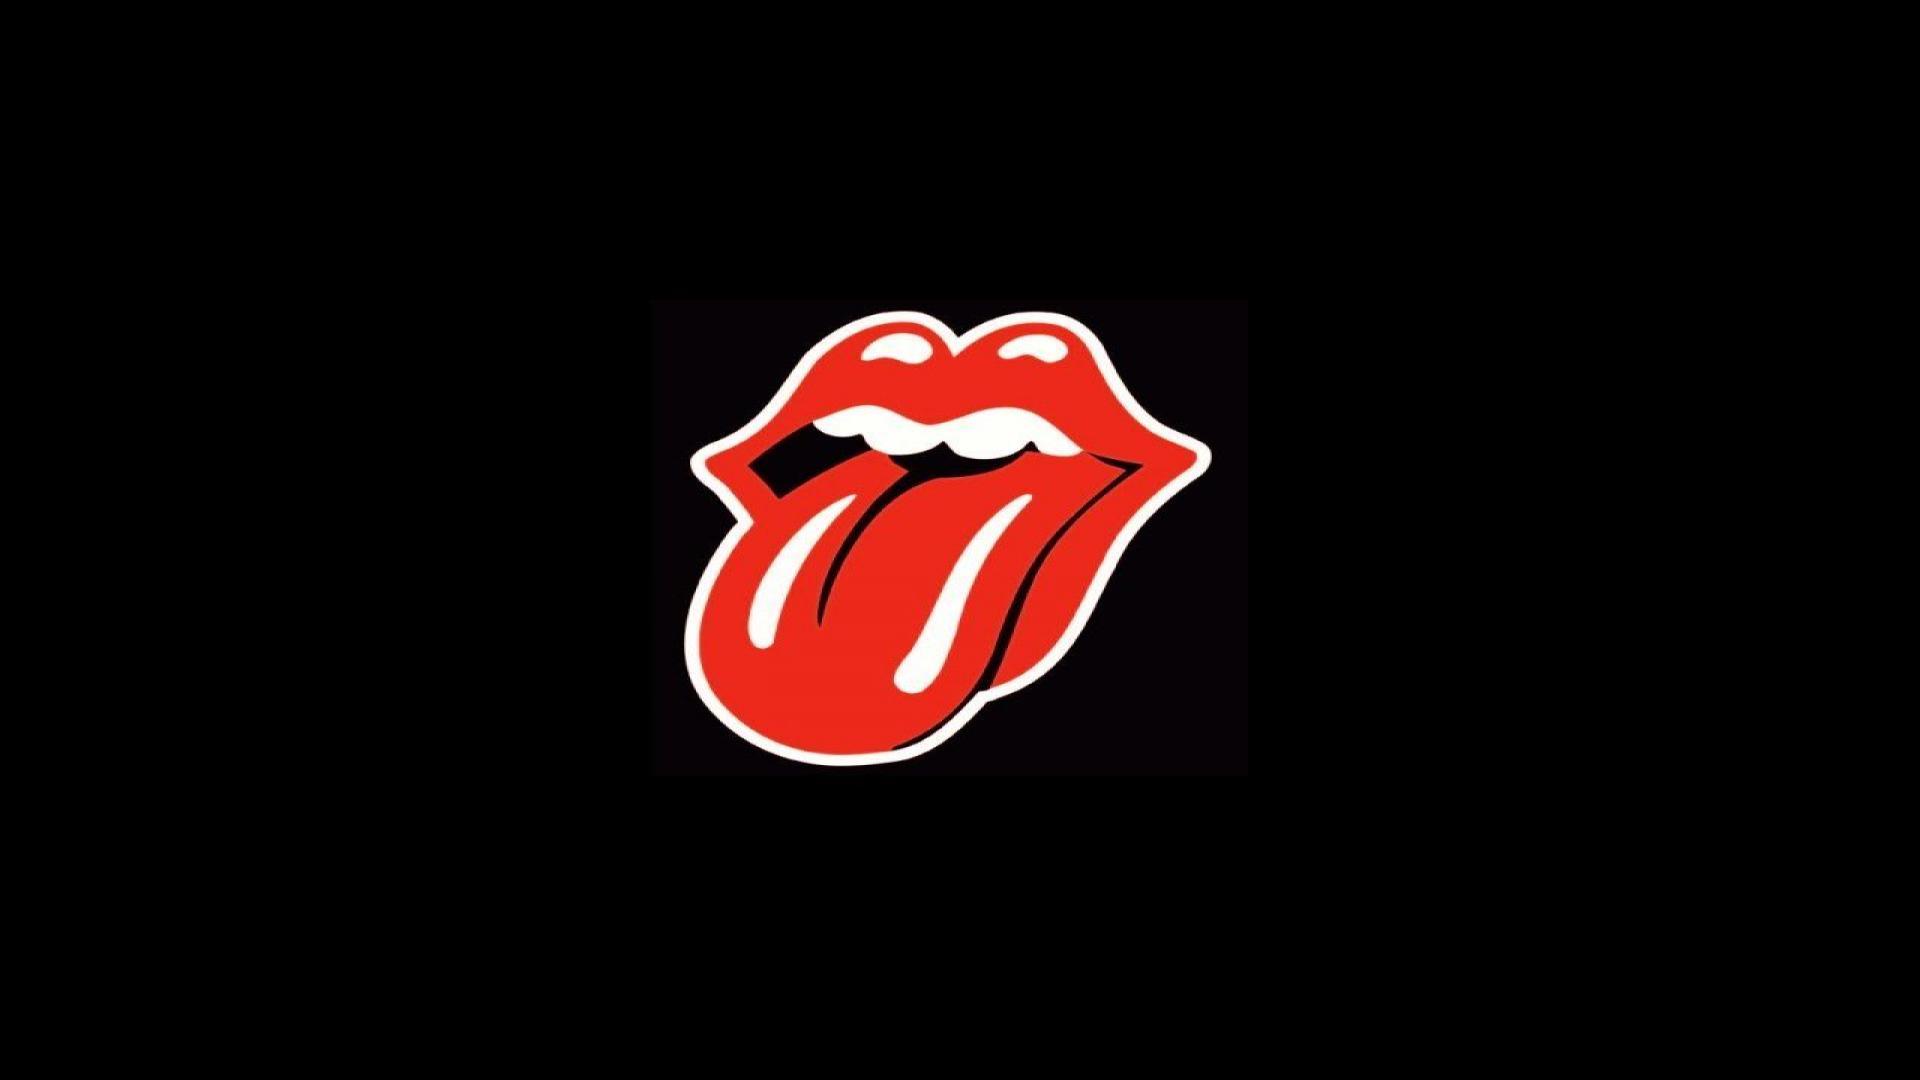 The Rolling Stones Wallpaper Full HD MCJGR5